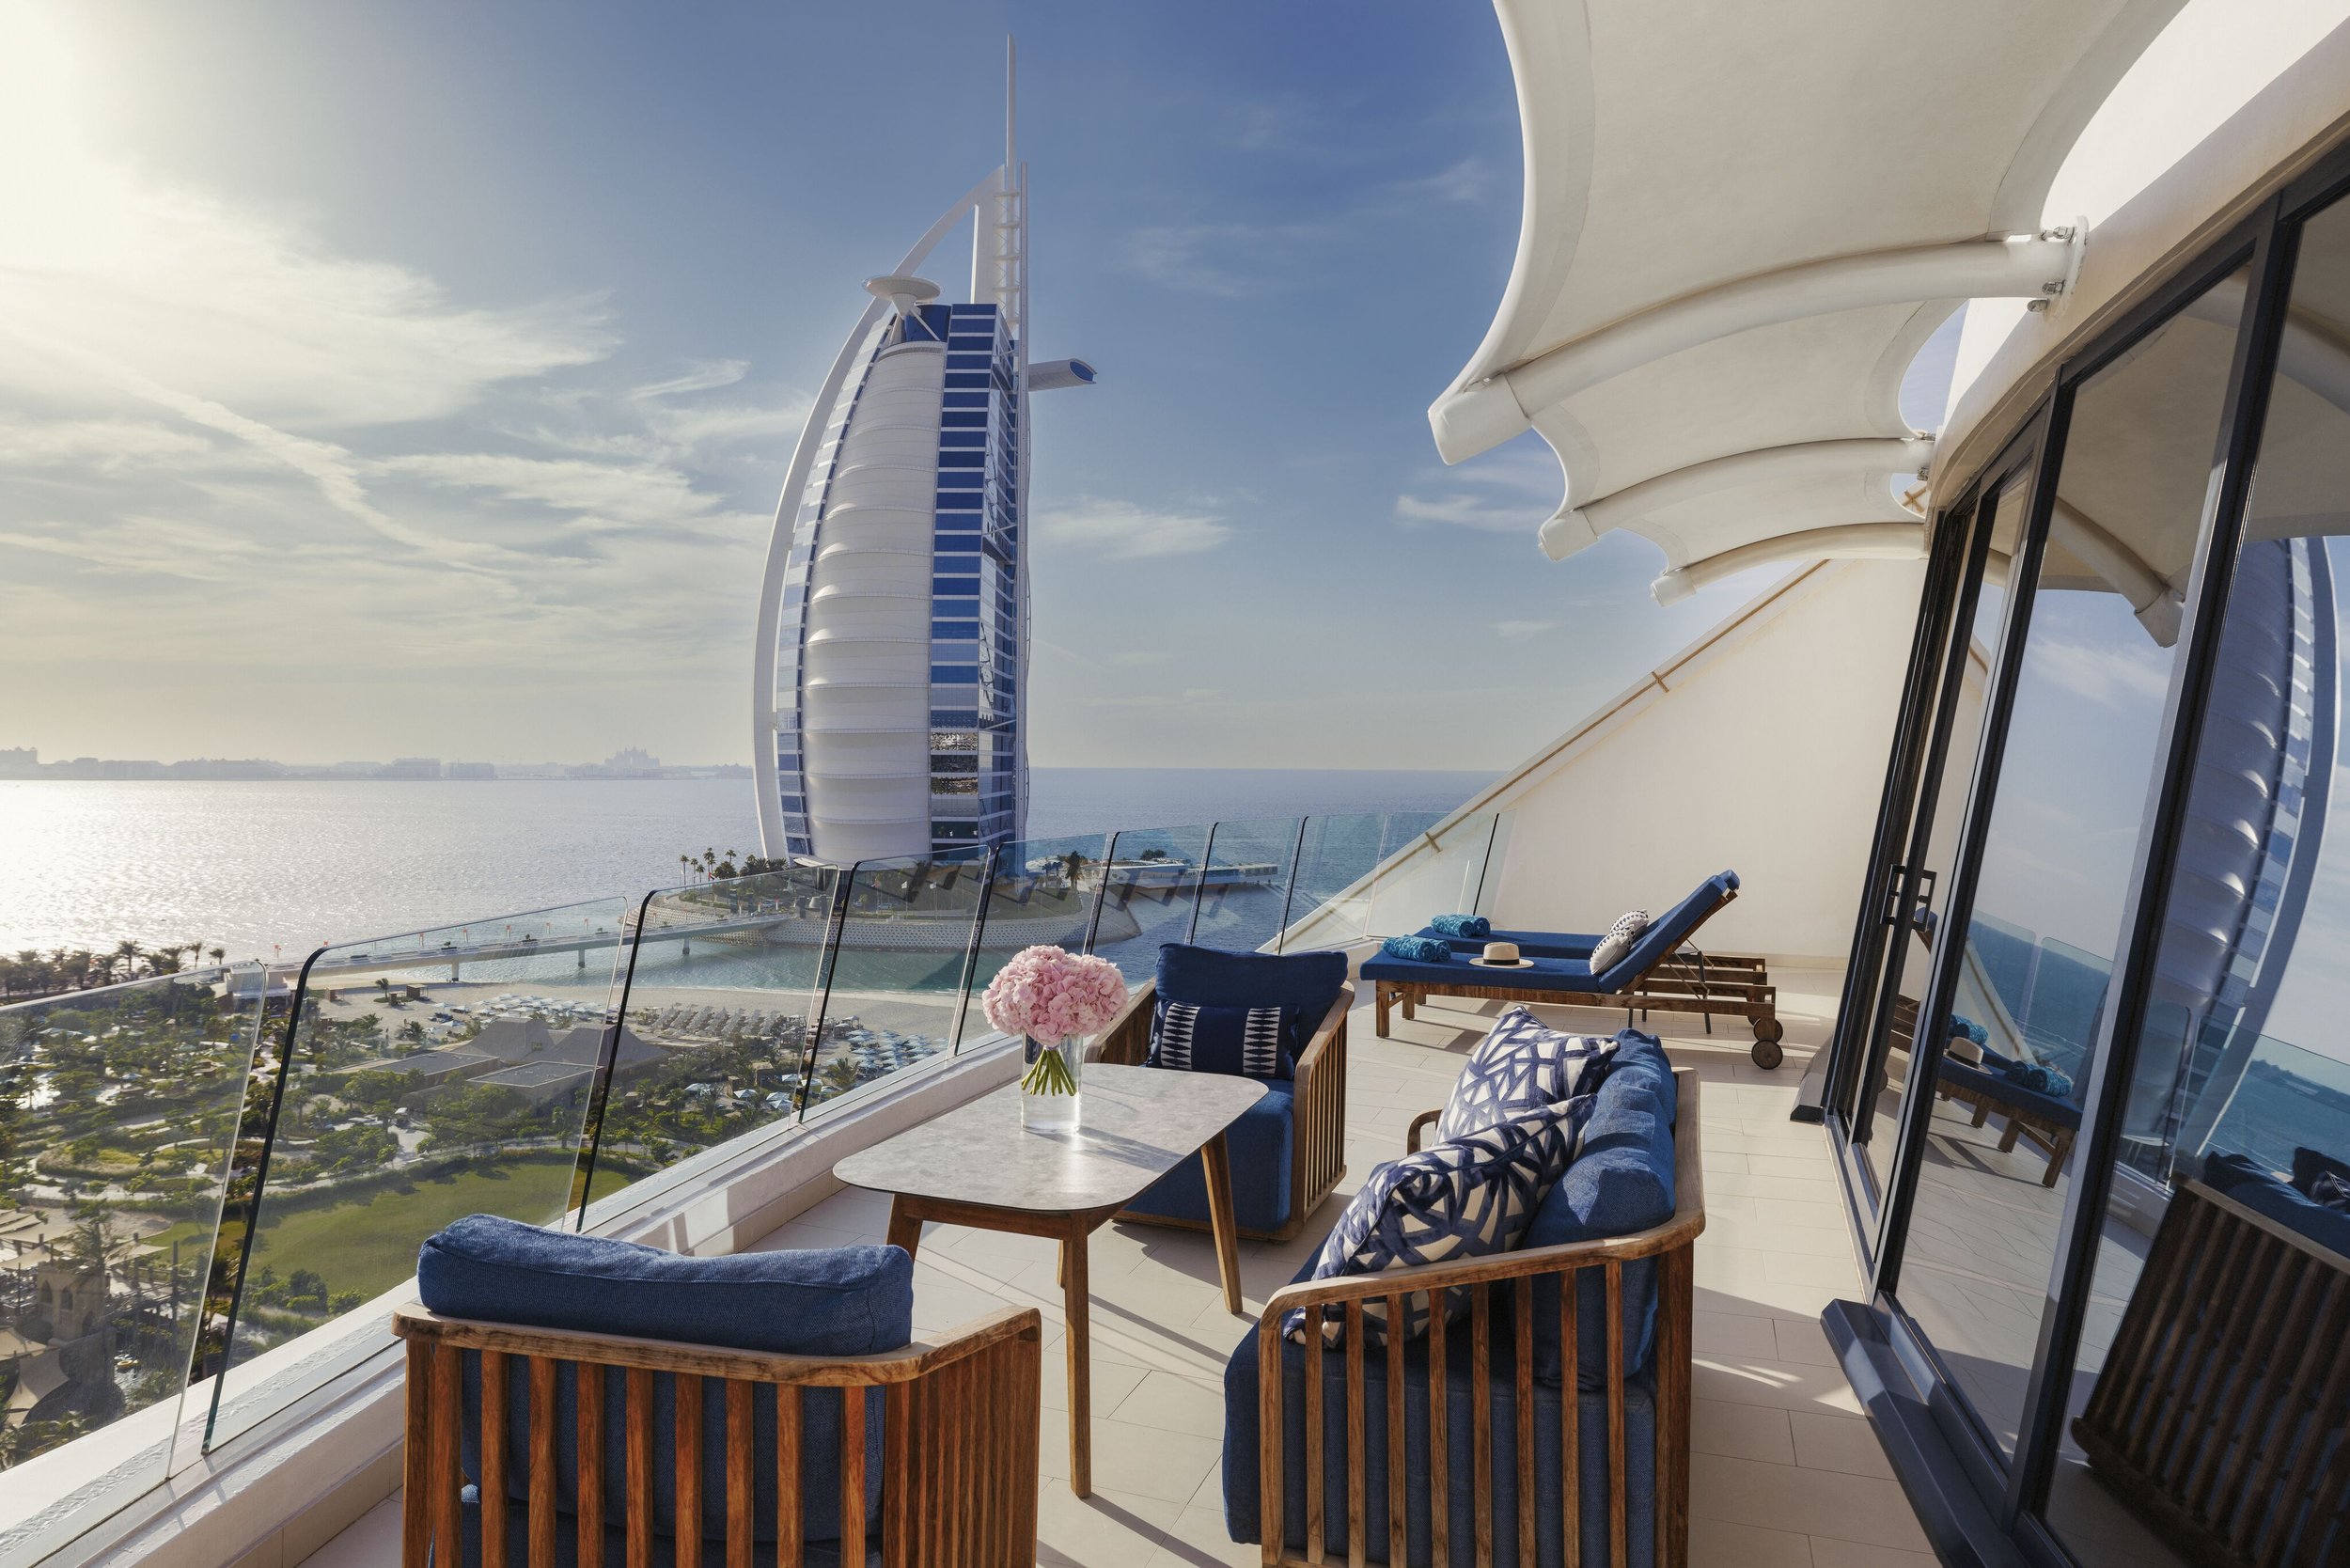 Medium_resolution_150dpi-Jumeirah Beach Hotel - Accommodation - Suite - Terrace Day.jpg